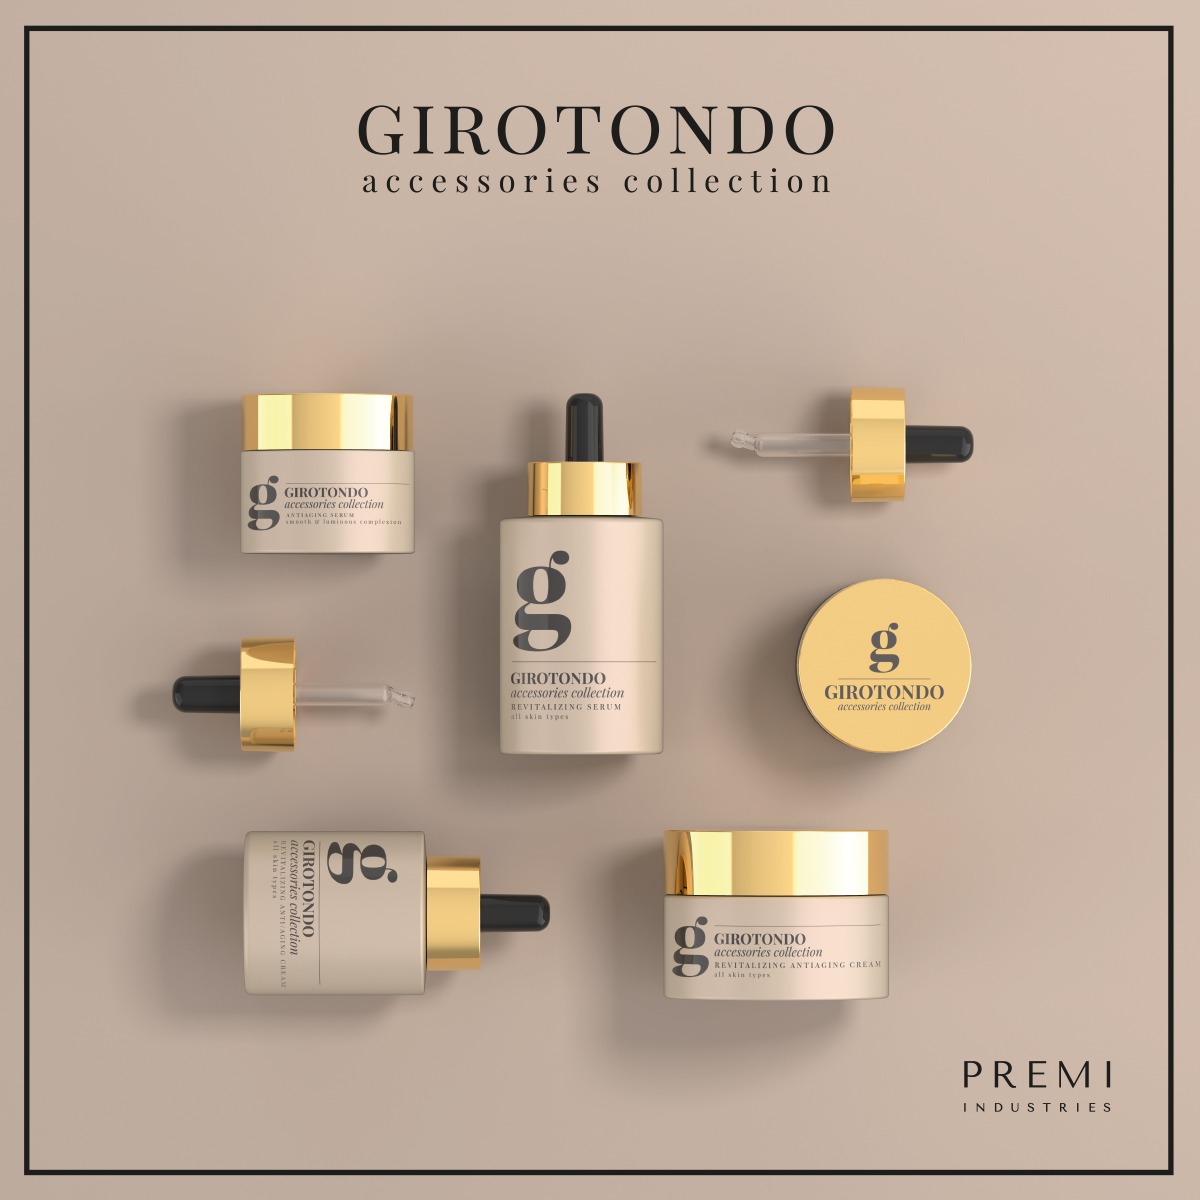 01-GIROTONDO-ACCESSORIES